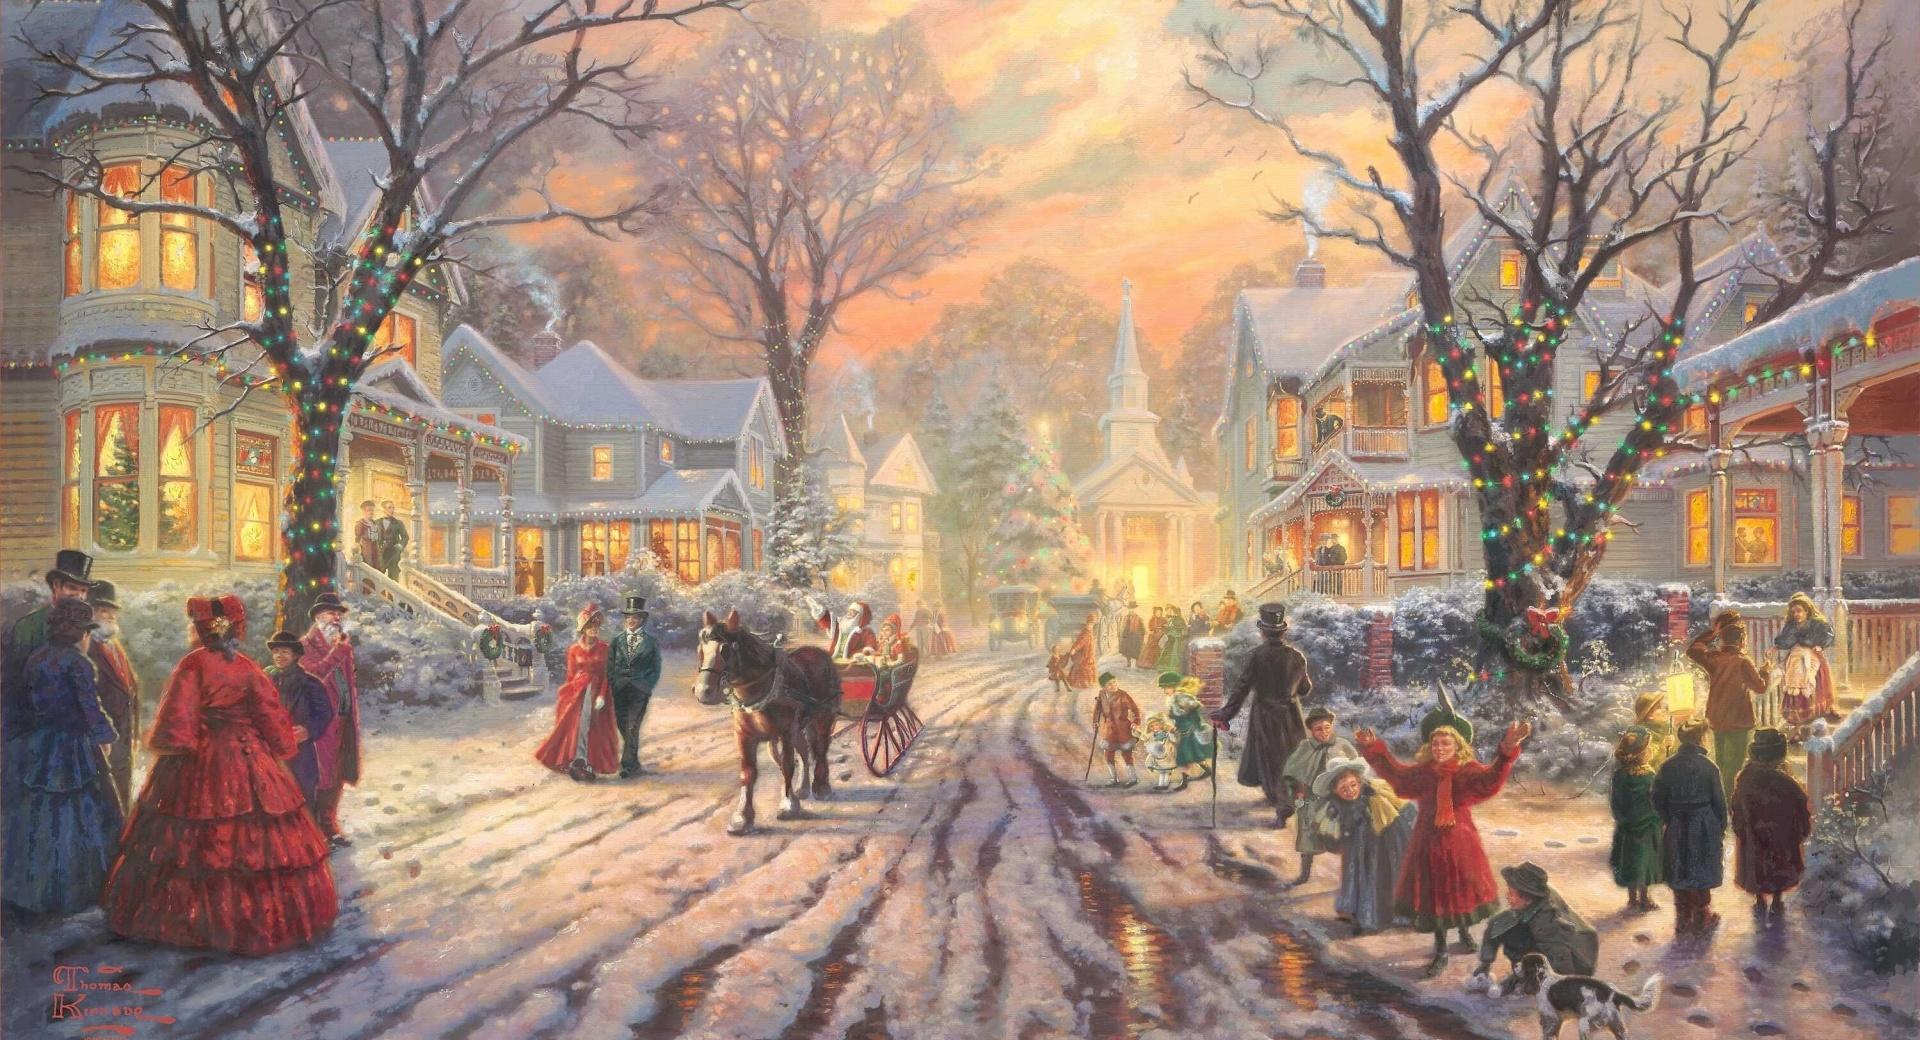 Victorian Christmas Carol by Thomas Kinkade at 2048 x 2048 iPad size wallpapers HD quality